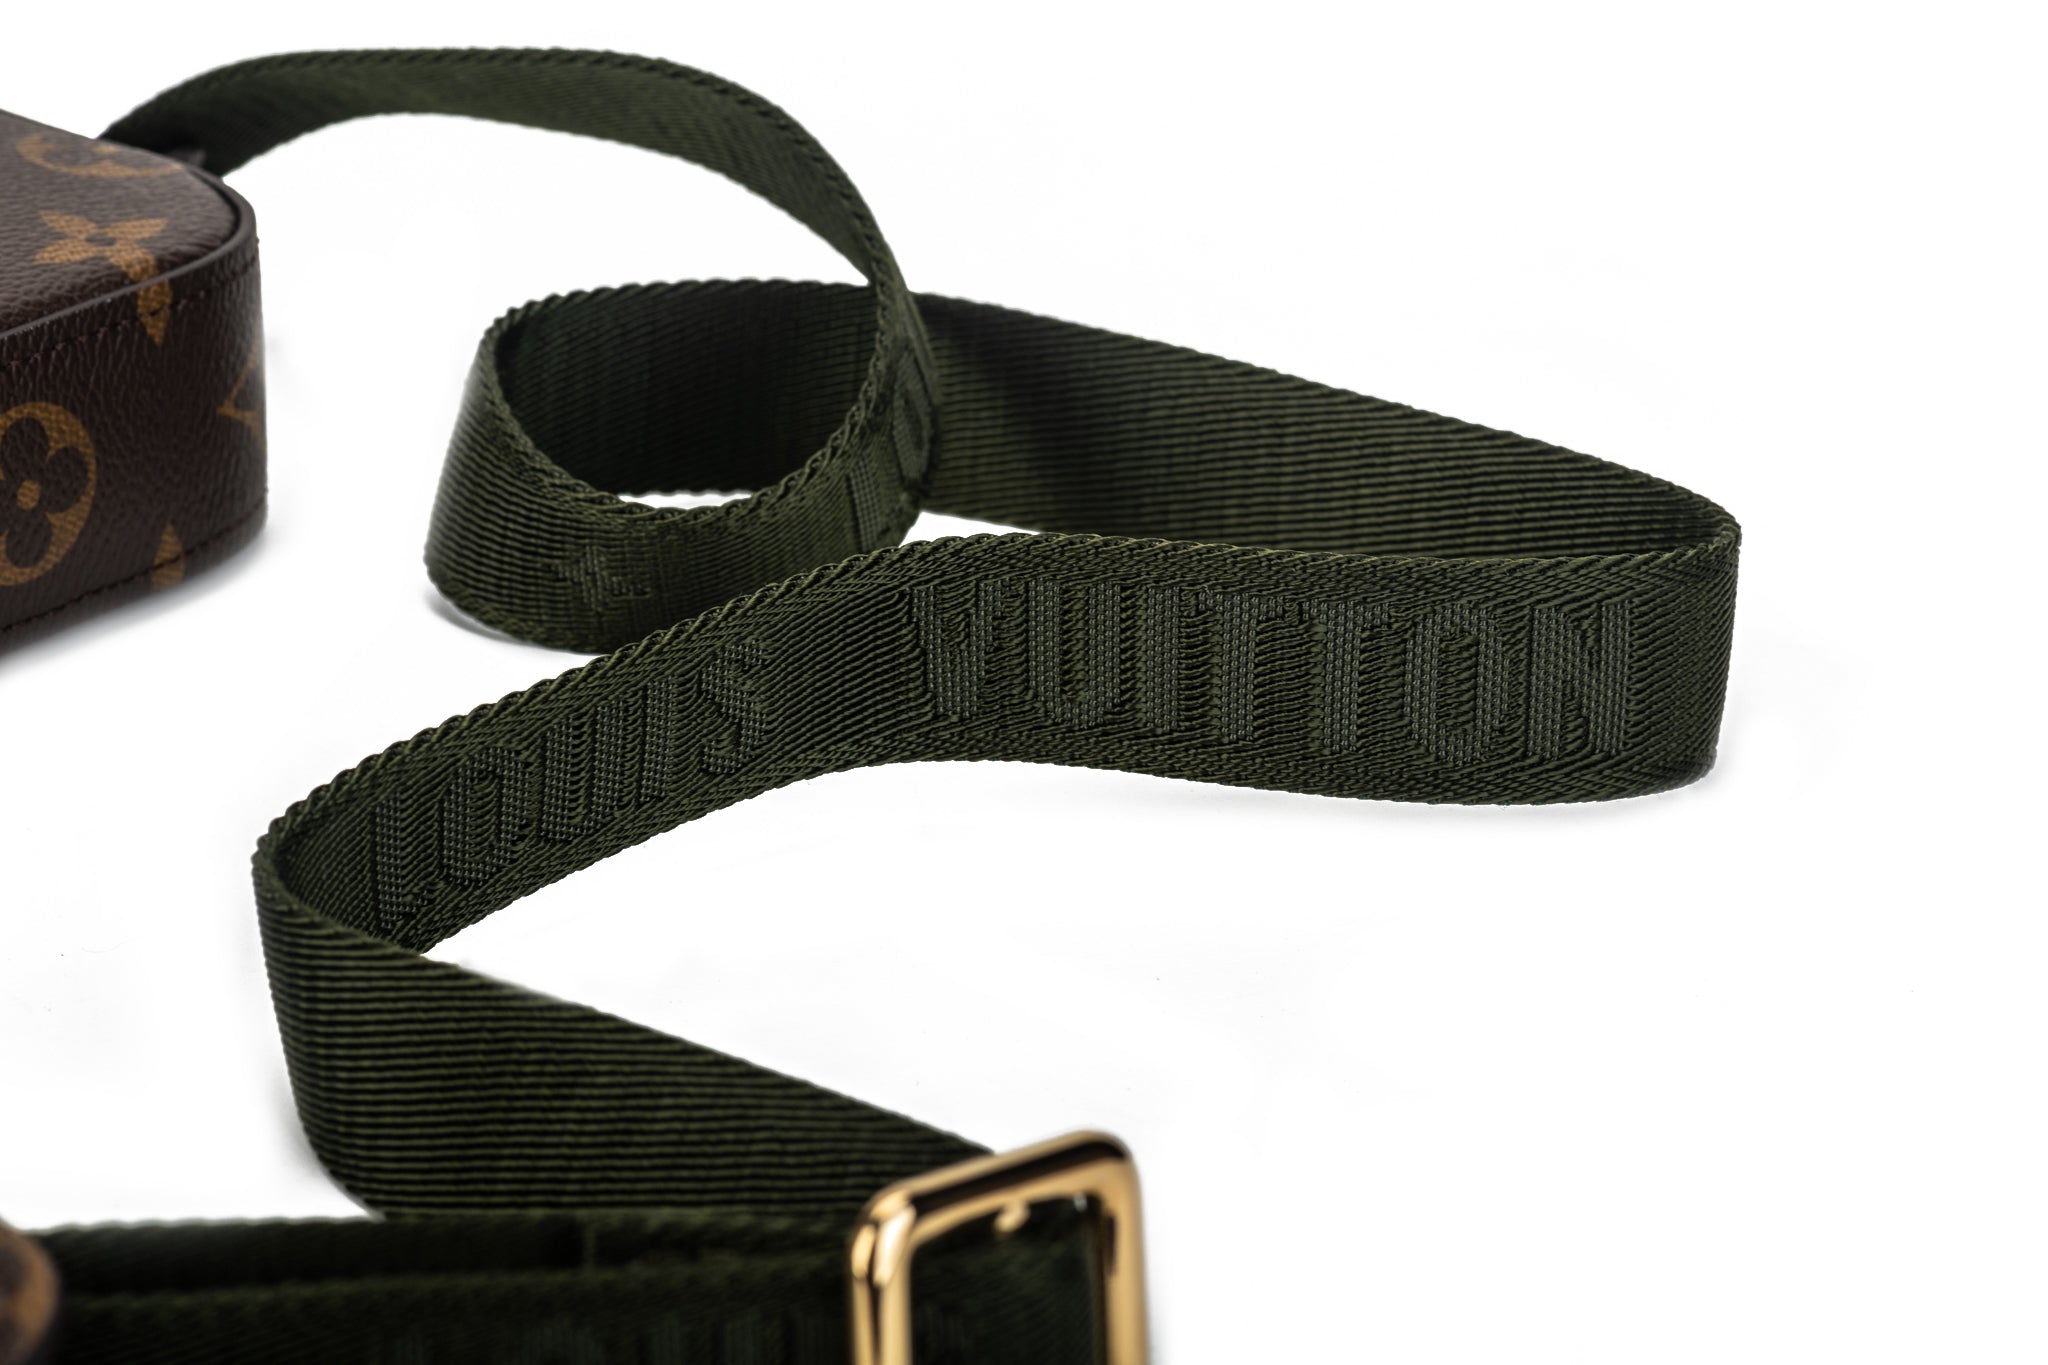 LV monogram Mini belt